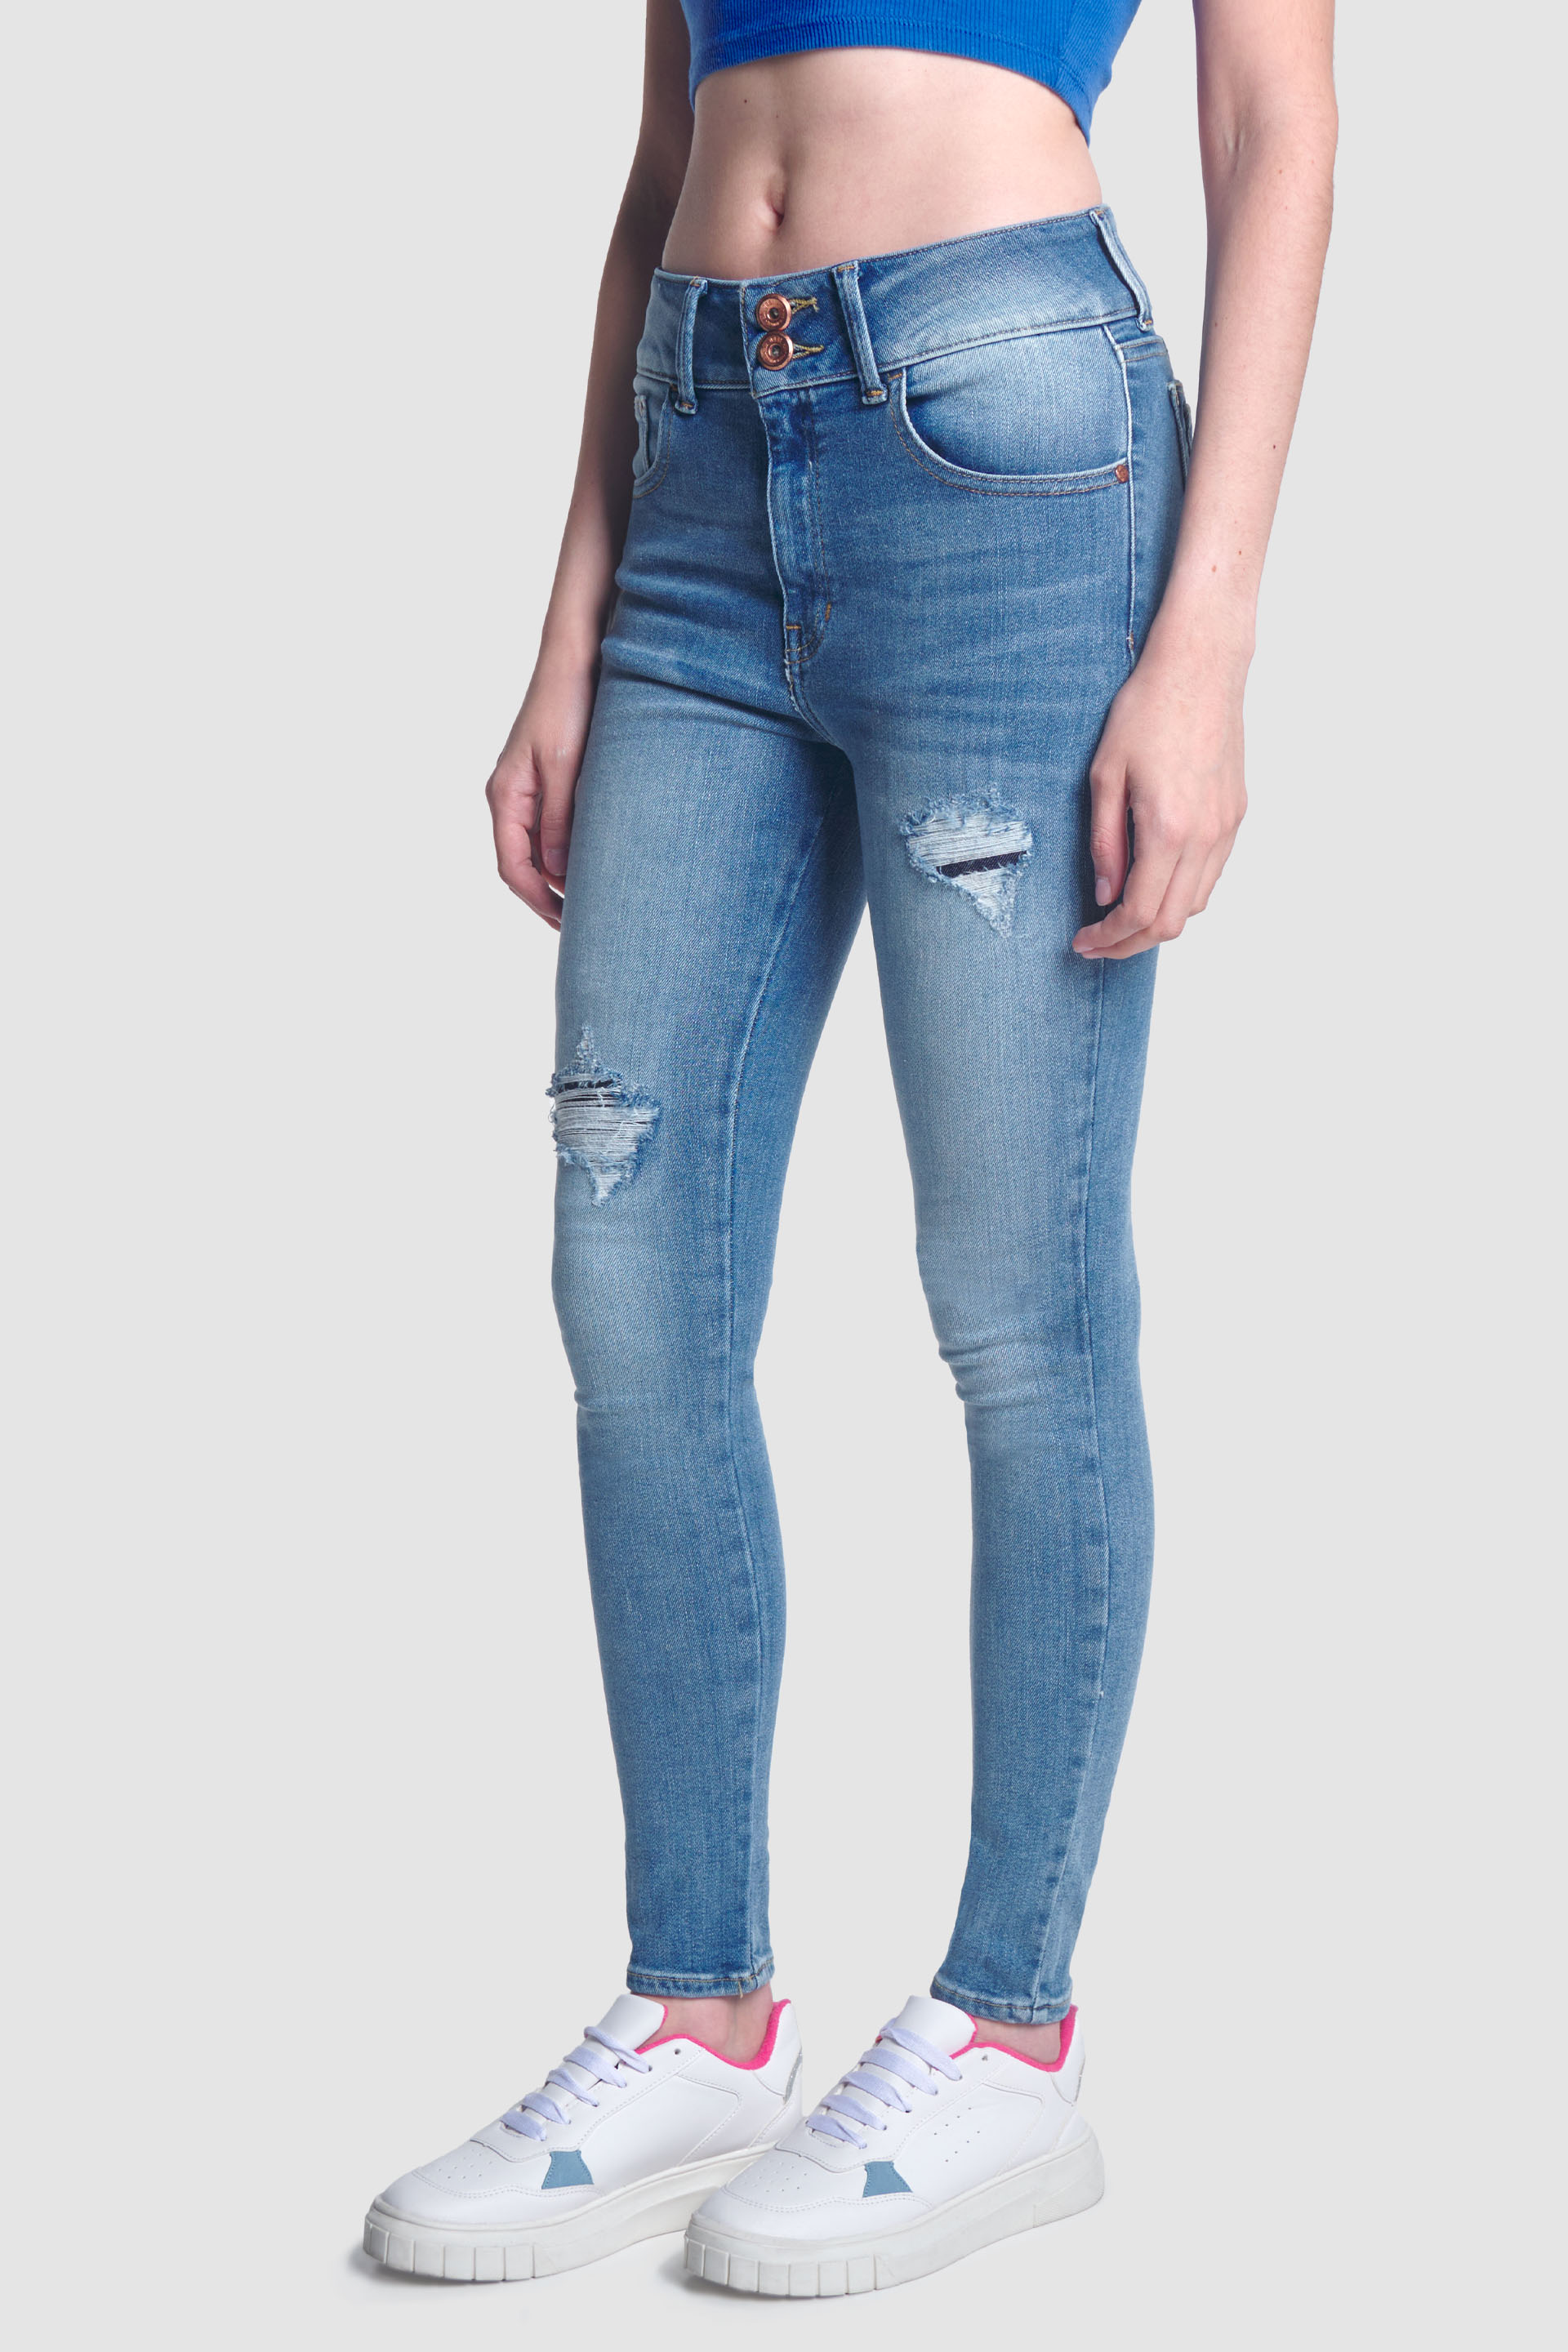 Jeans Oggi 2212103 Mezclilla Color Azul Claro Para Mujer